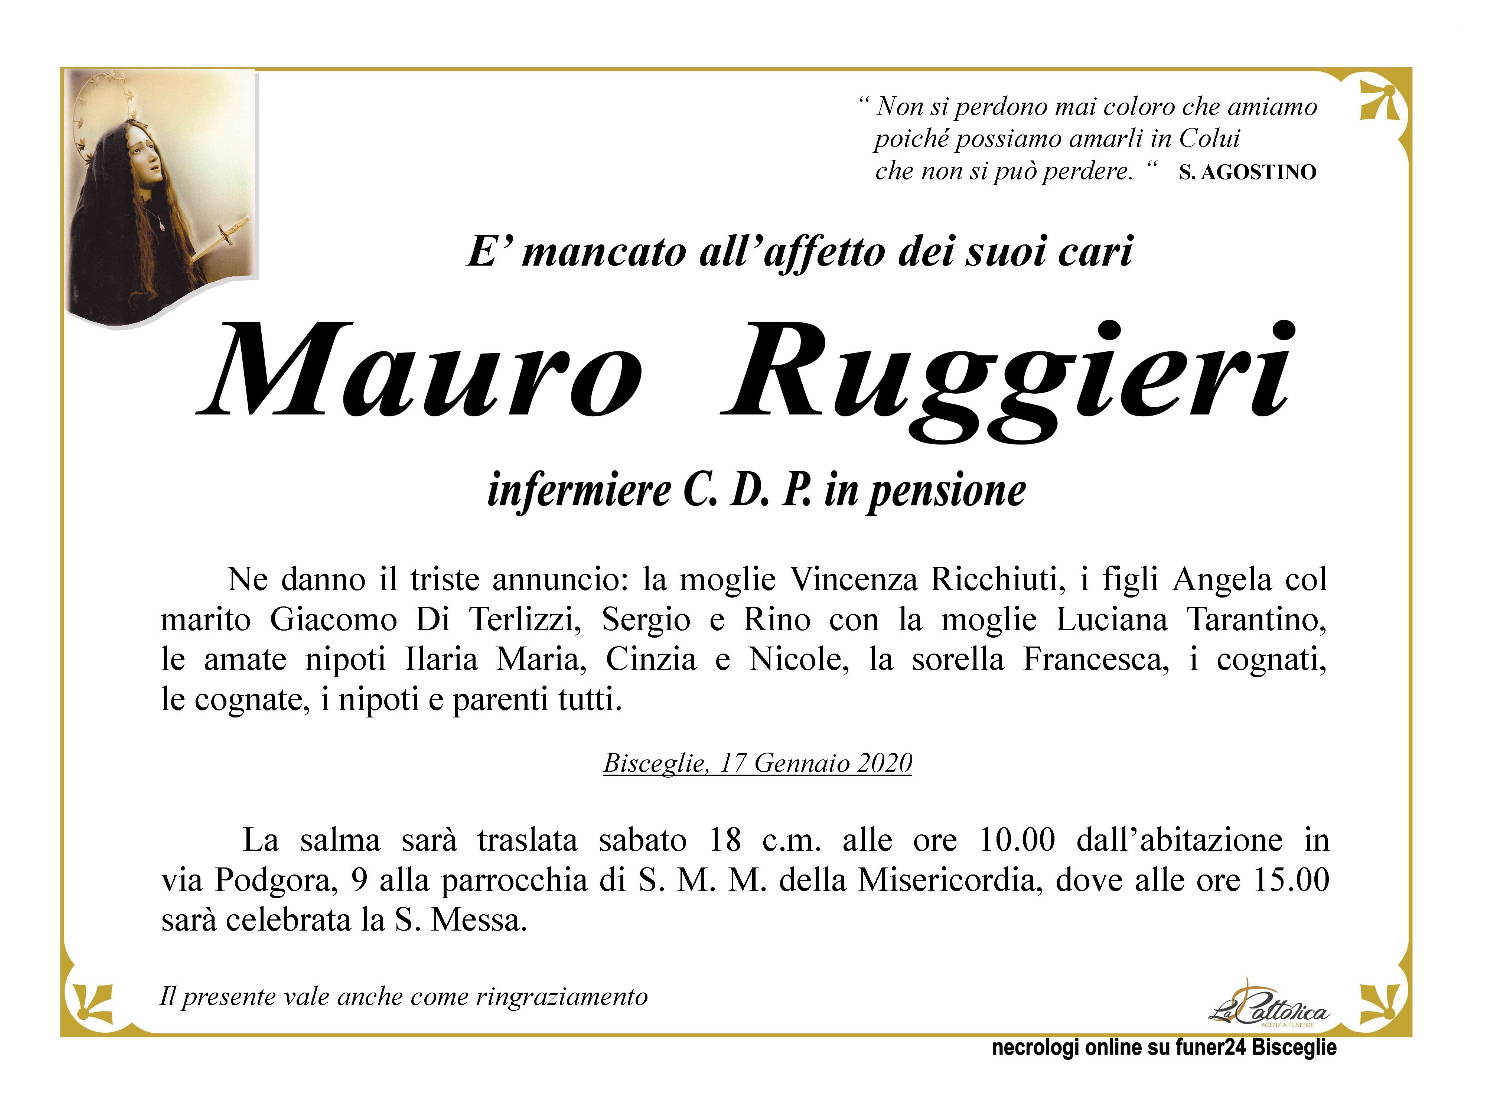 Mauro Ruggieri